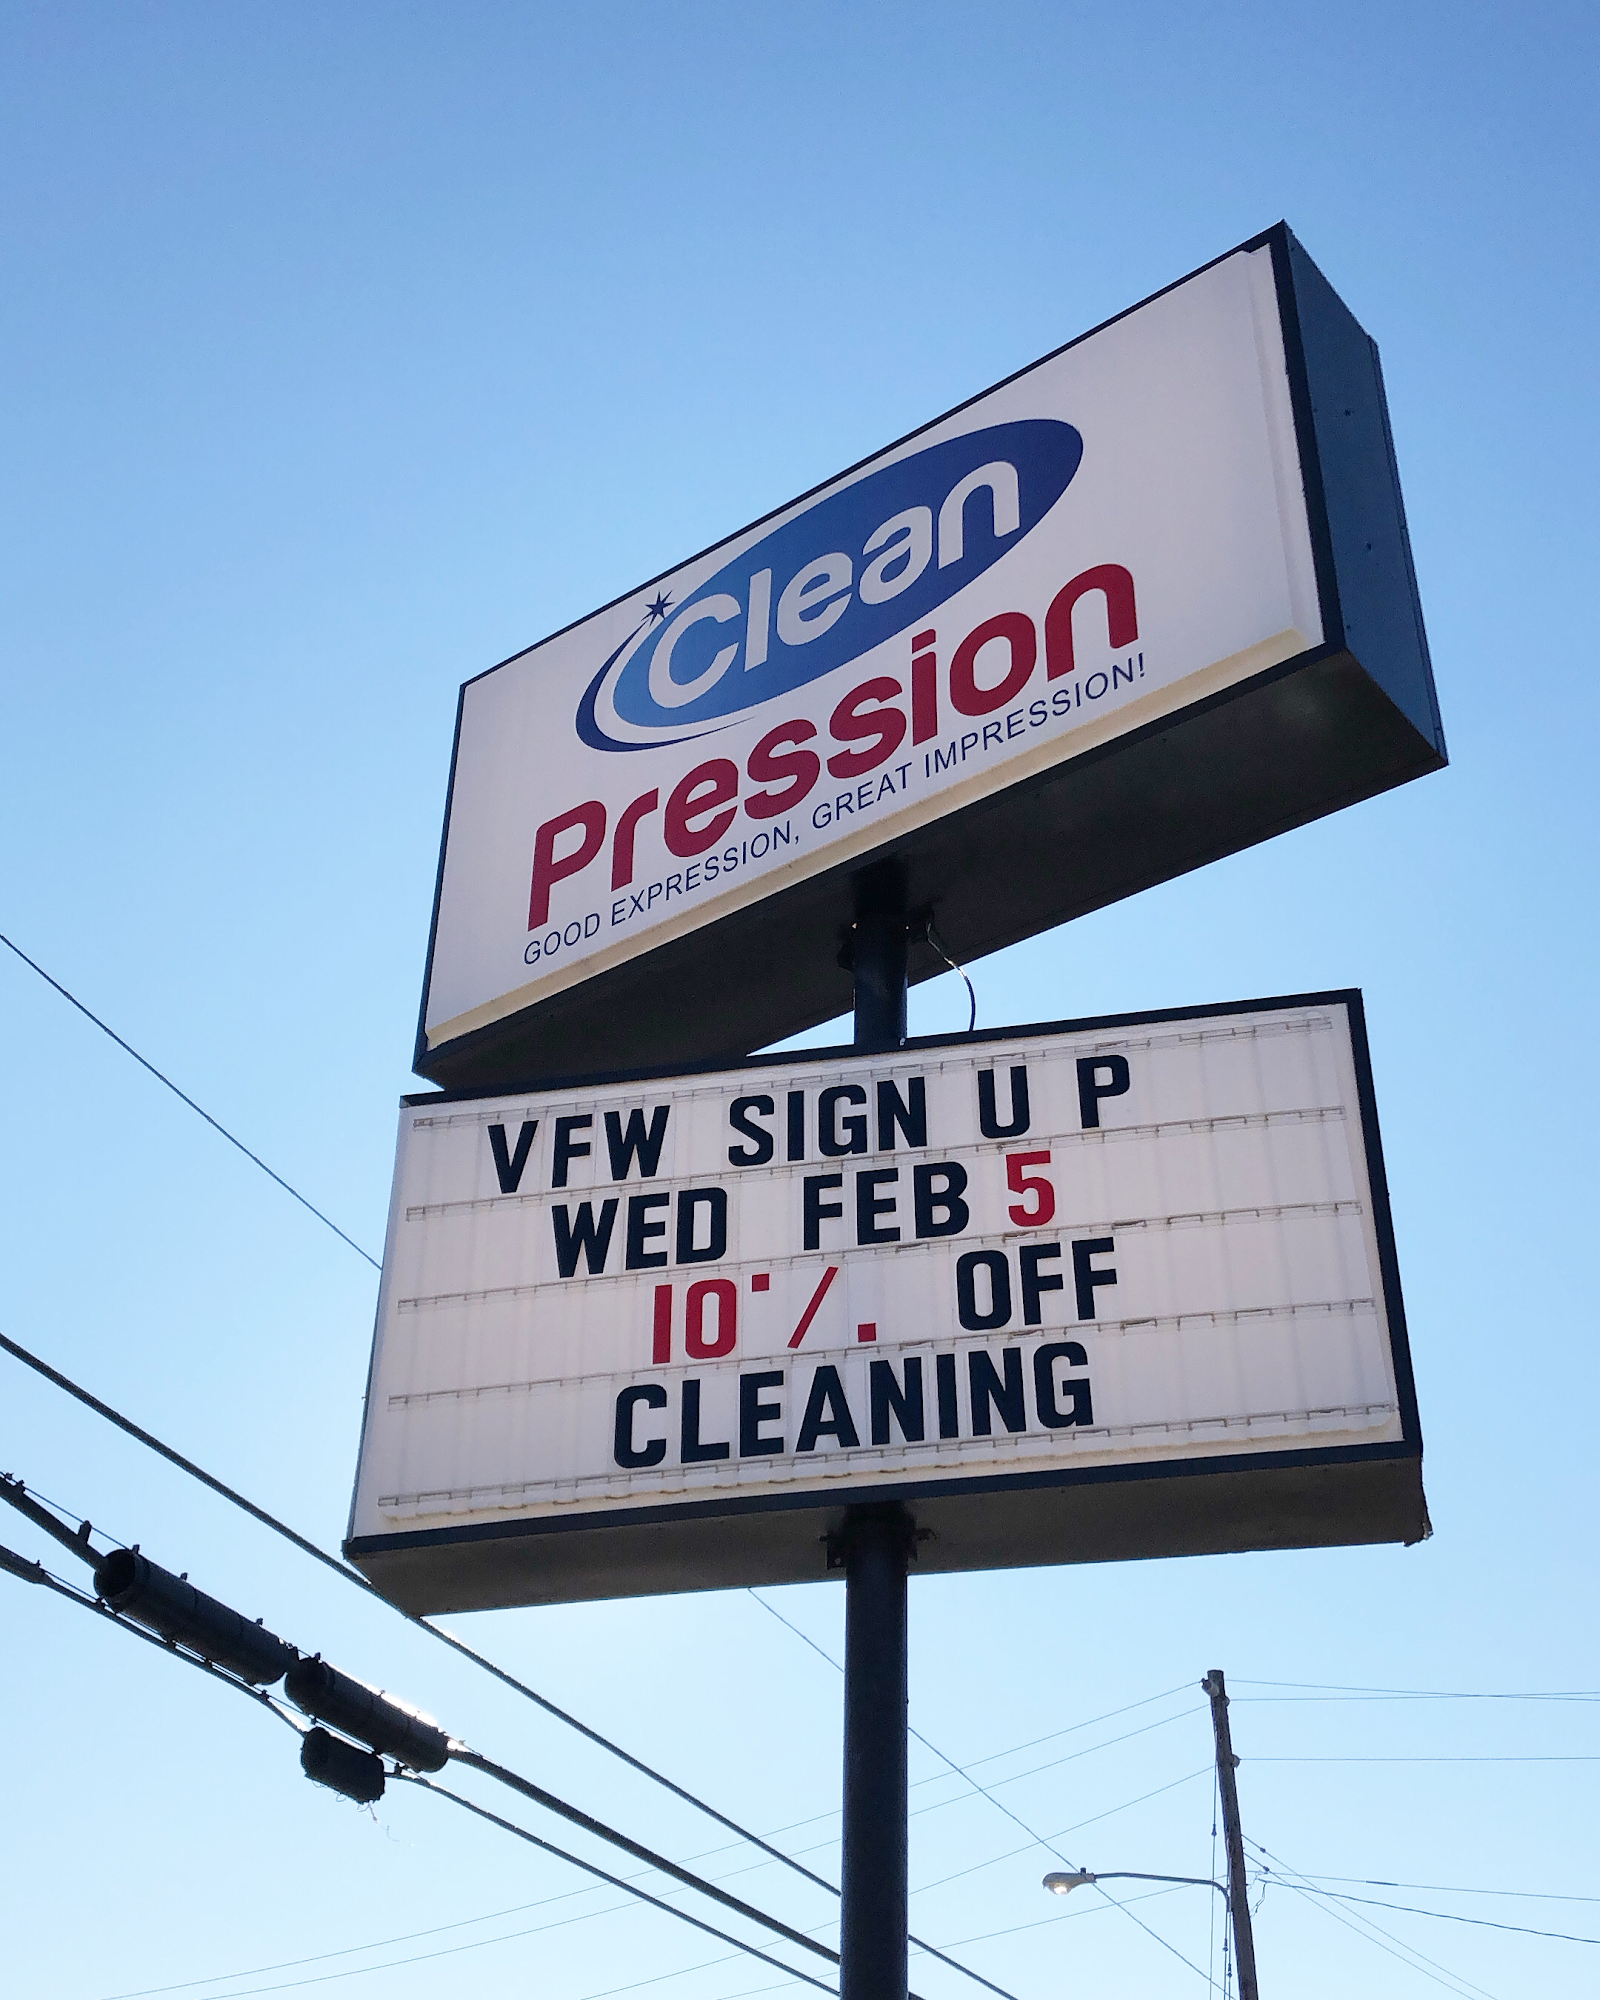 CleanPression Dry Cleaner 1315 N Bragg Blvd, Spring Lake North Carolina 28390